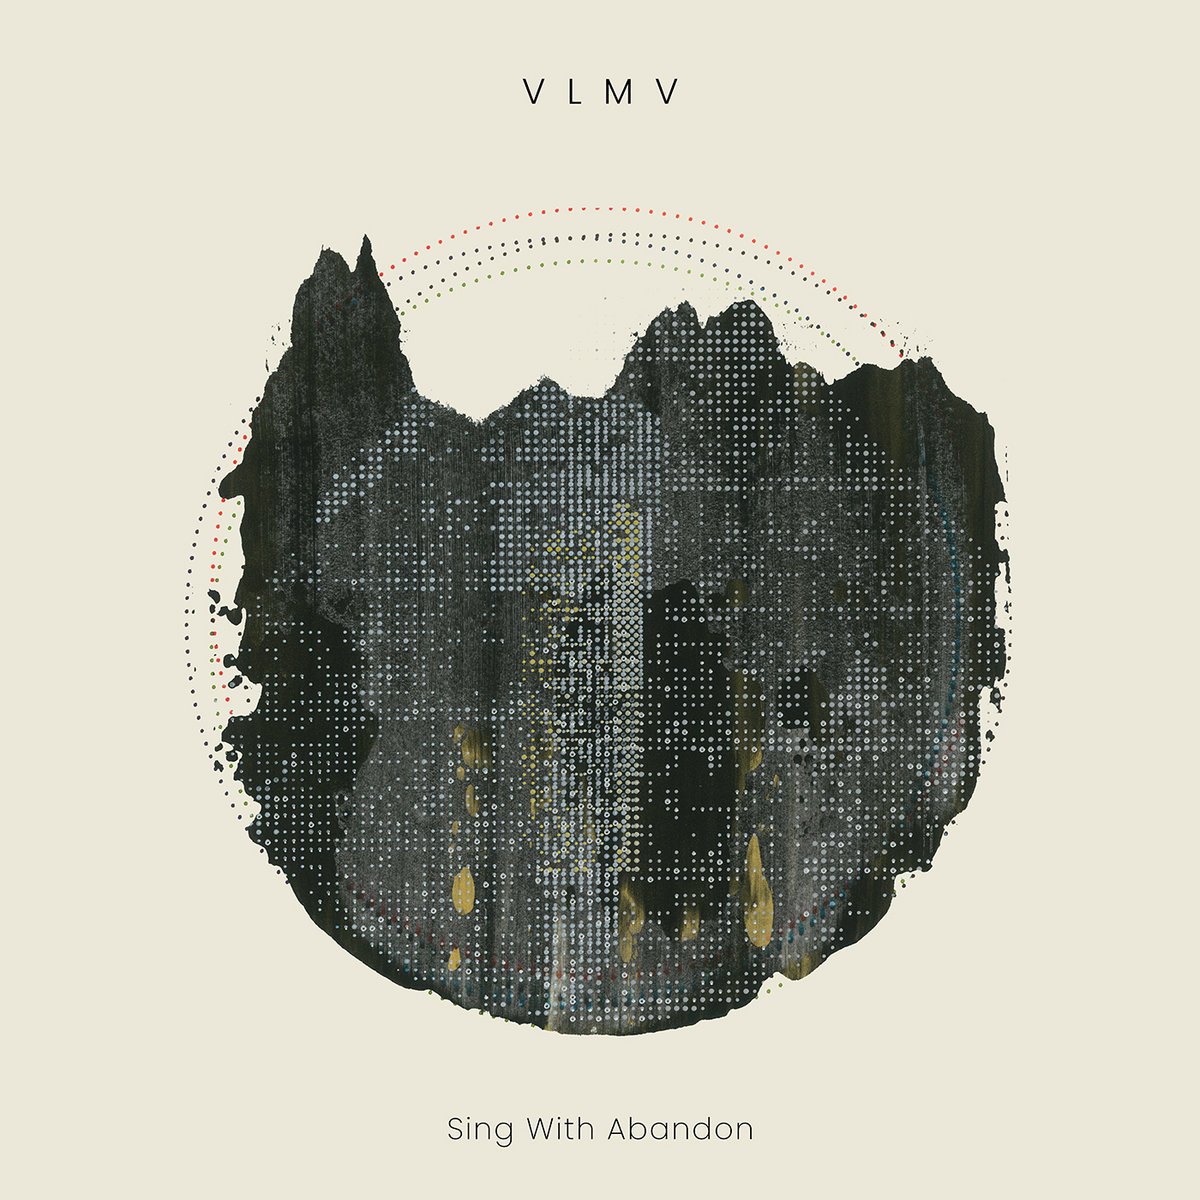 VLMV – “Sing With Abandon”